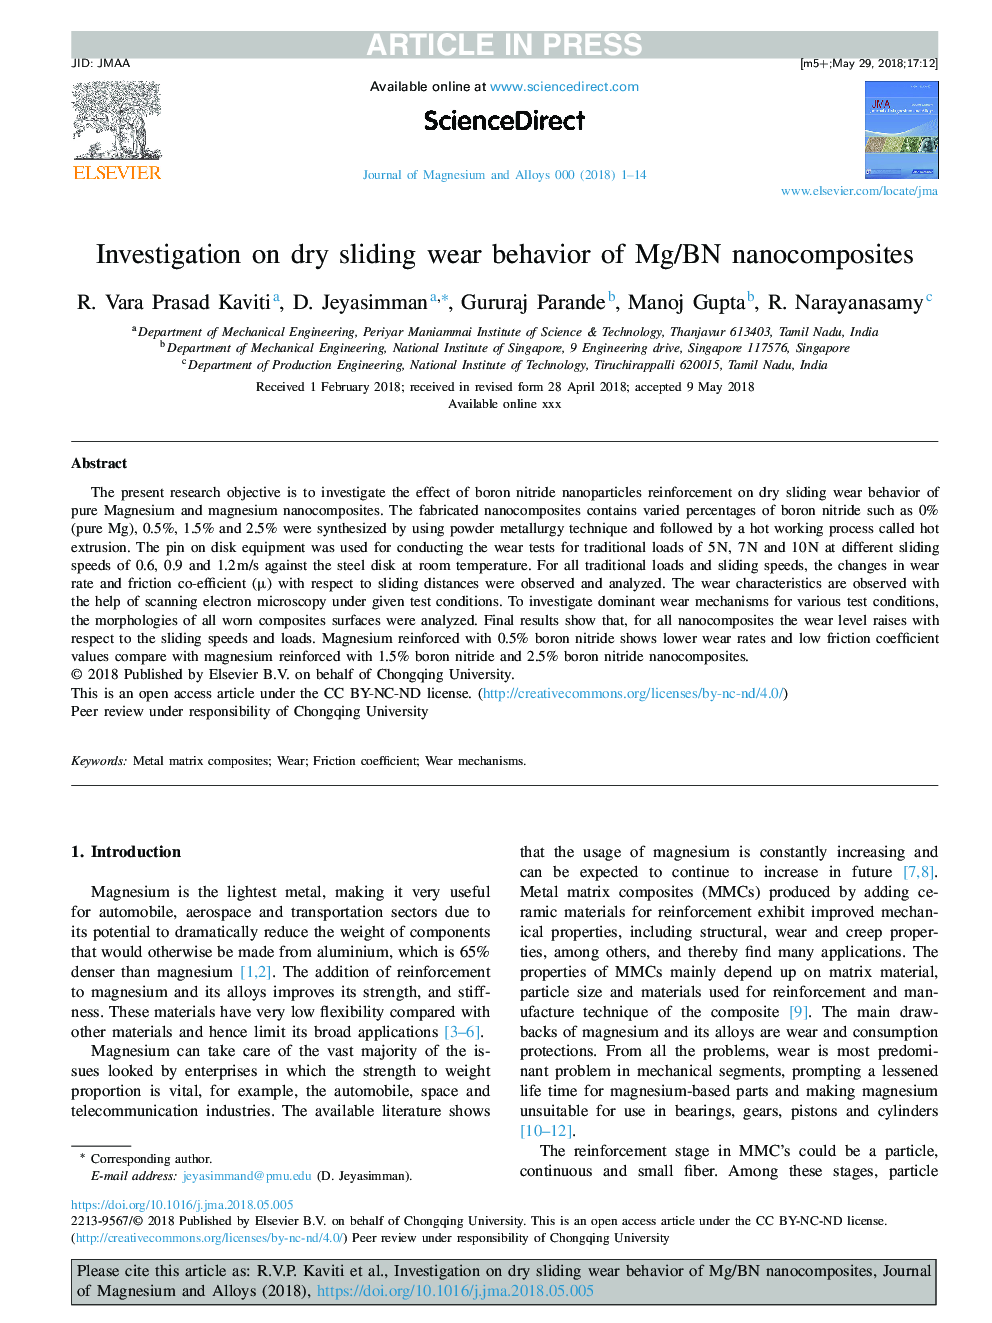 Investigation on dry sliding wear behavior of Mg/BN nanocomposites